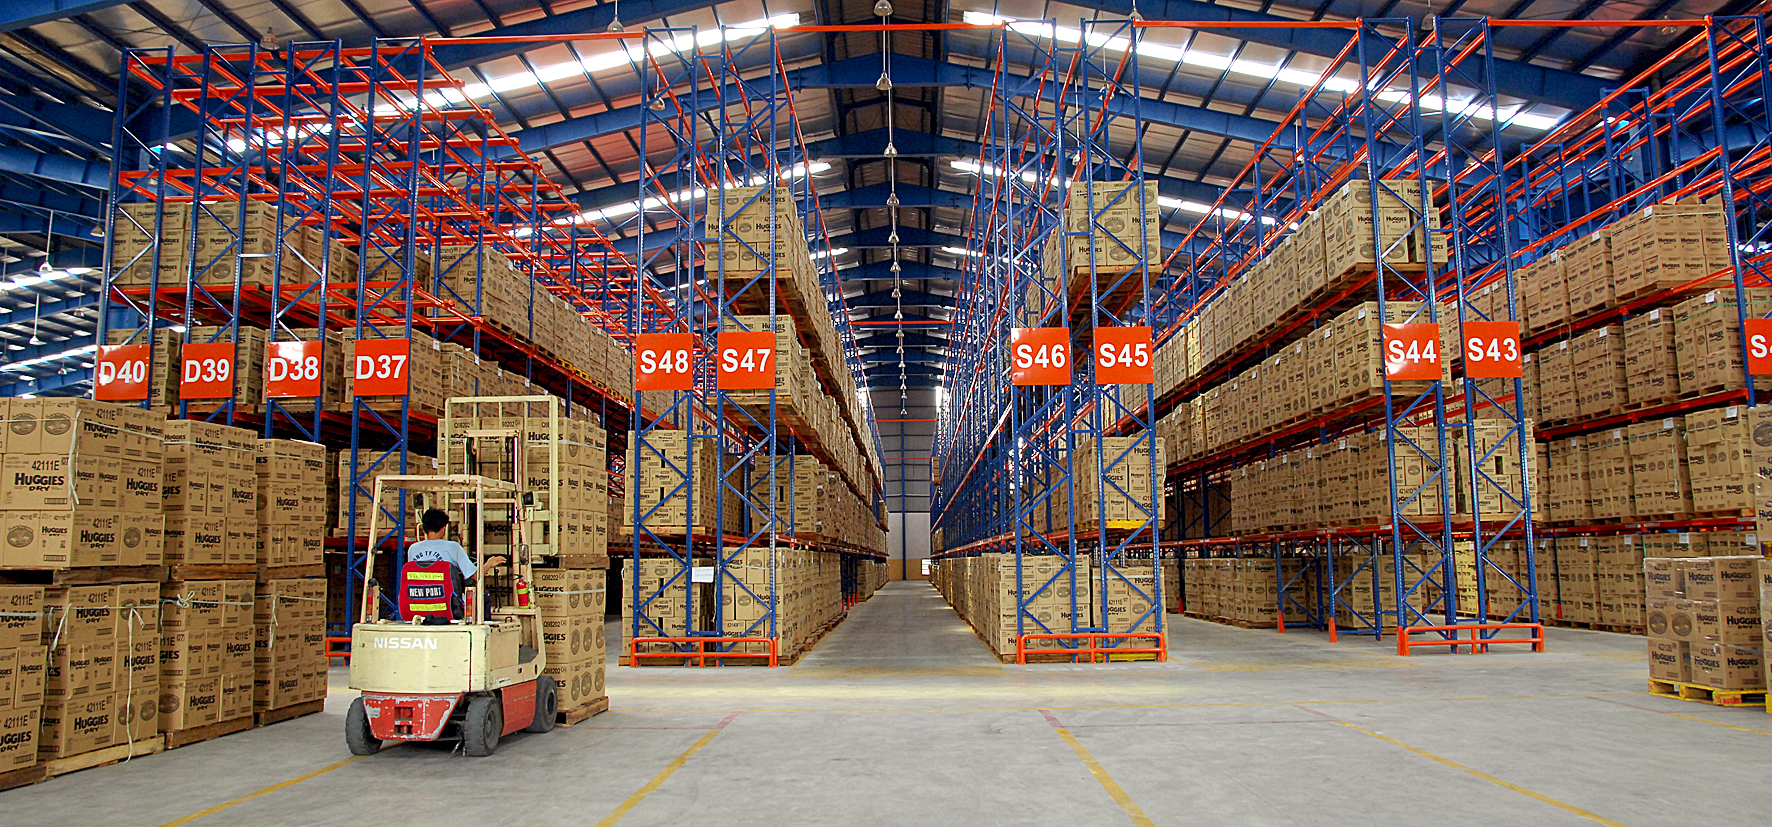 Warehouse Management System (WMS)